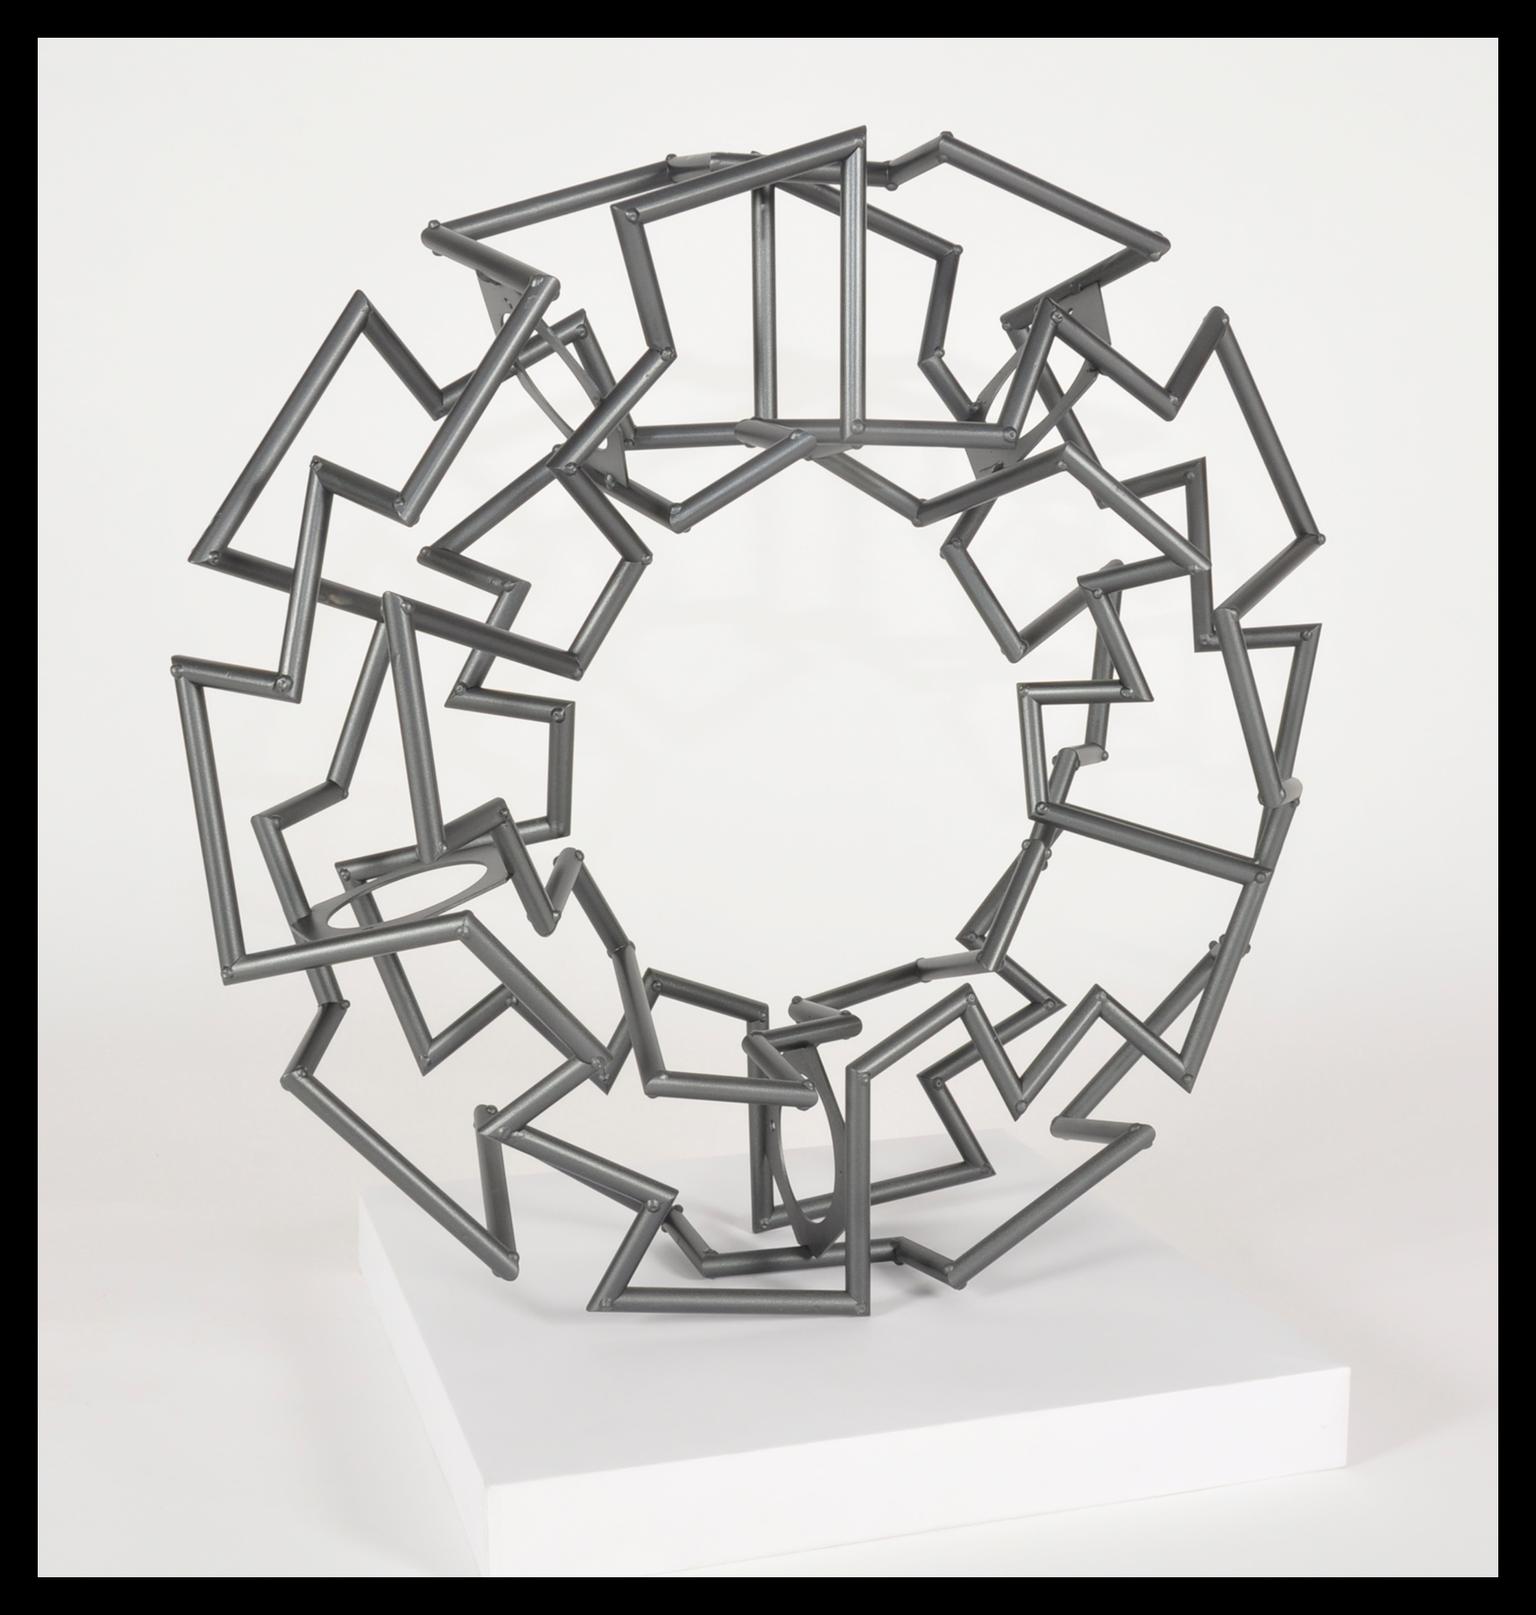 Image for entry 'Möbius Discrete Ring'